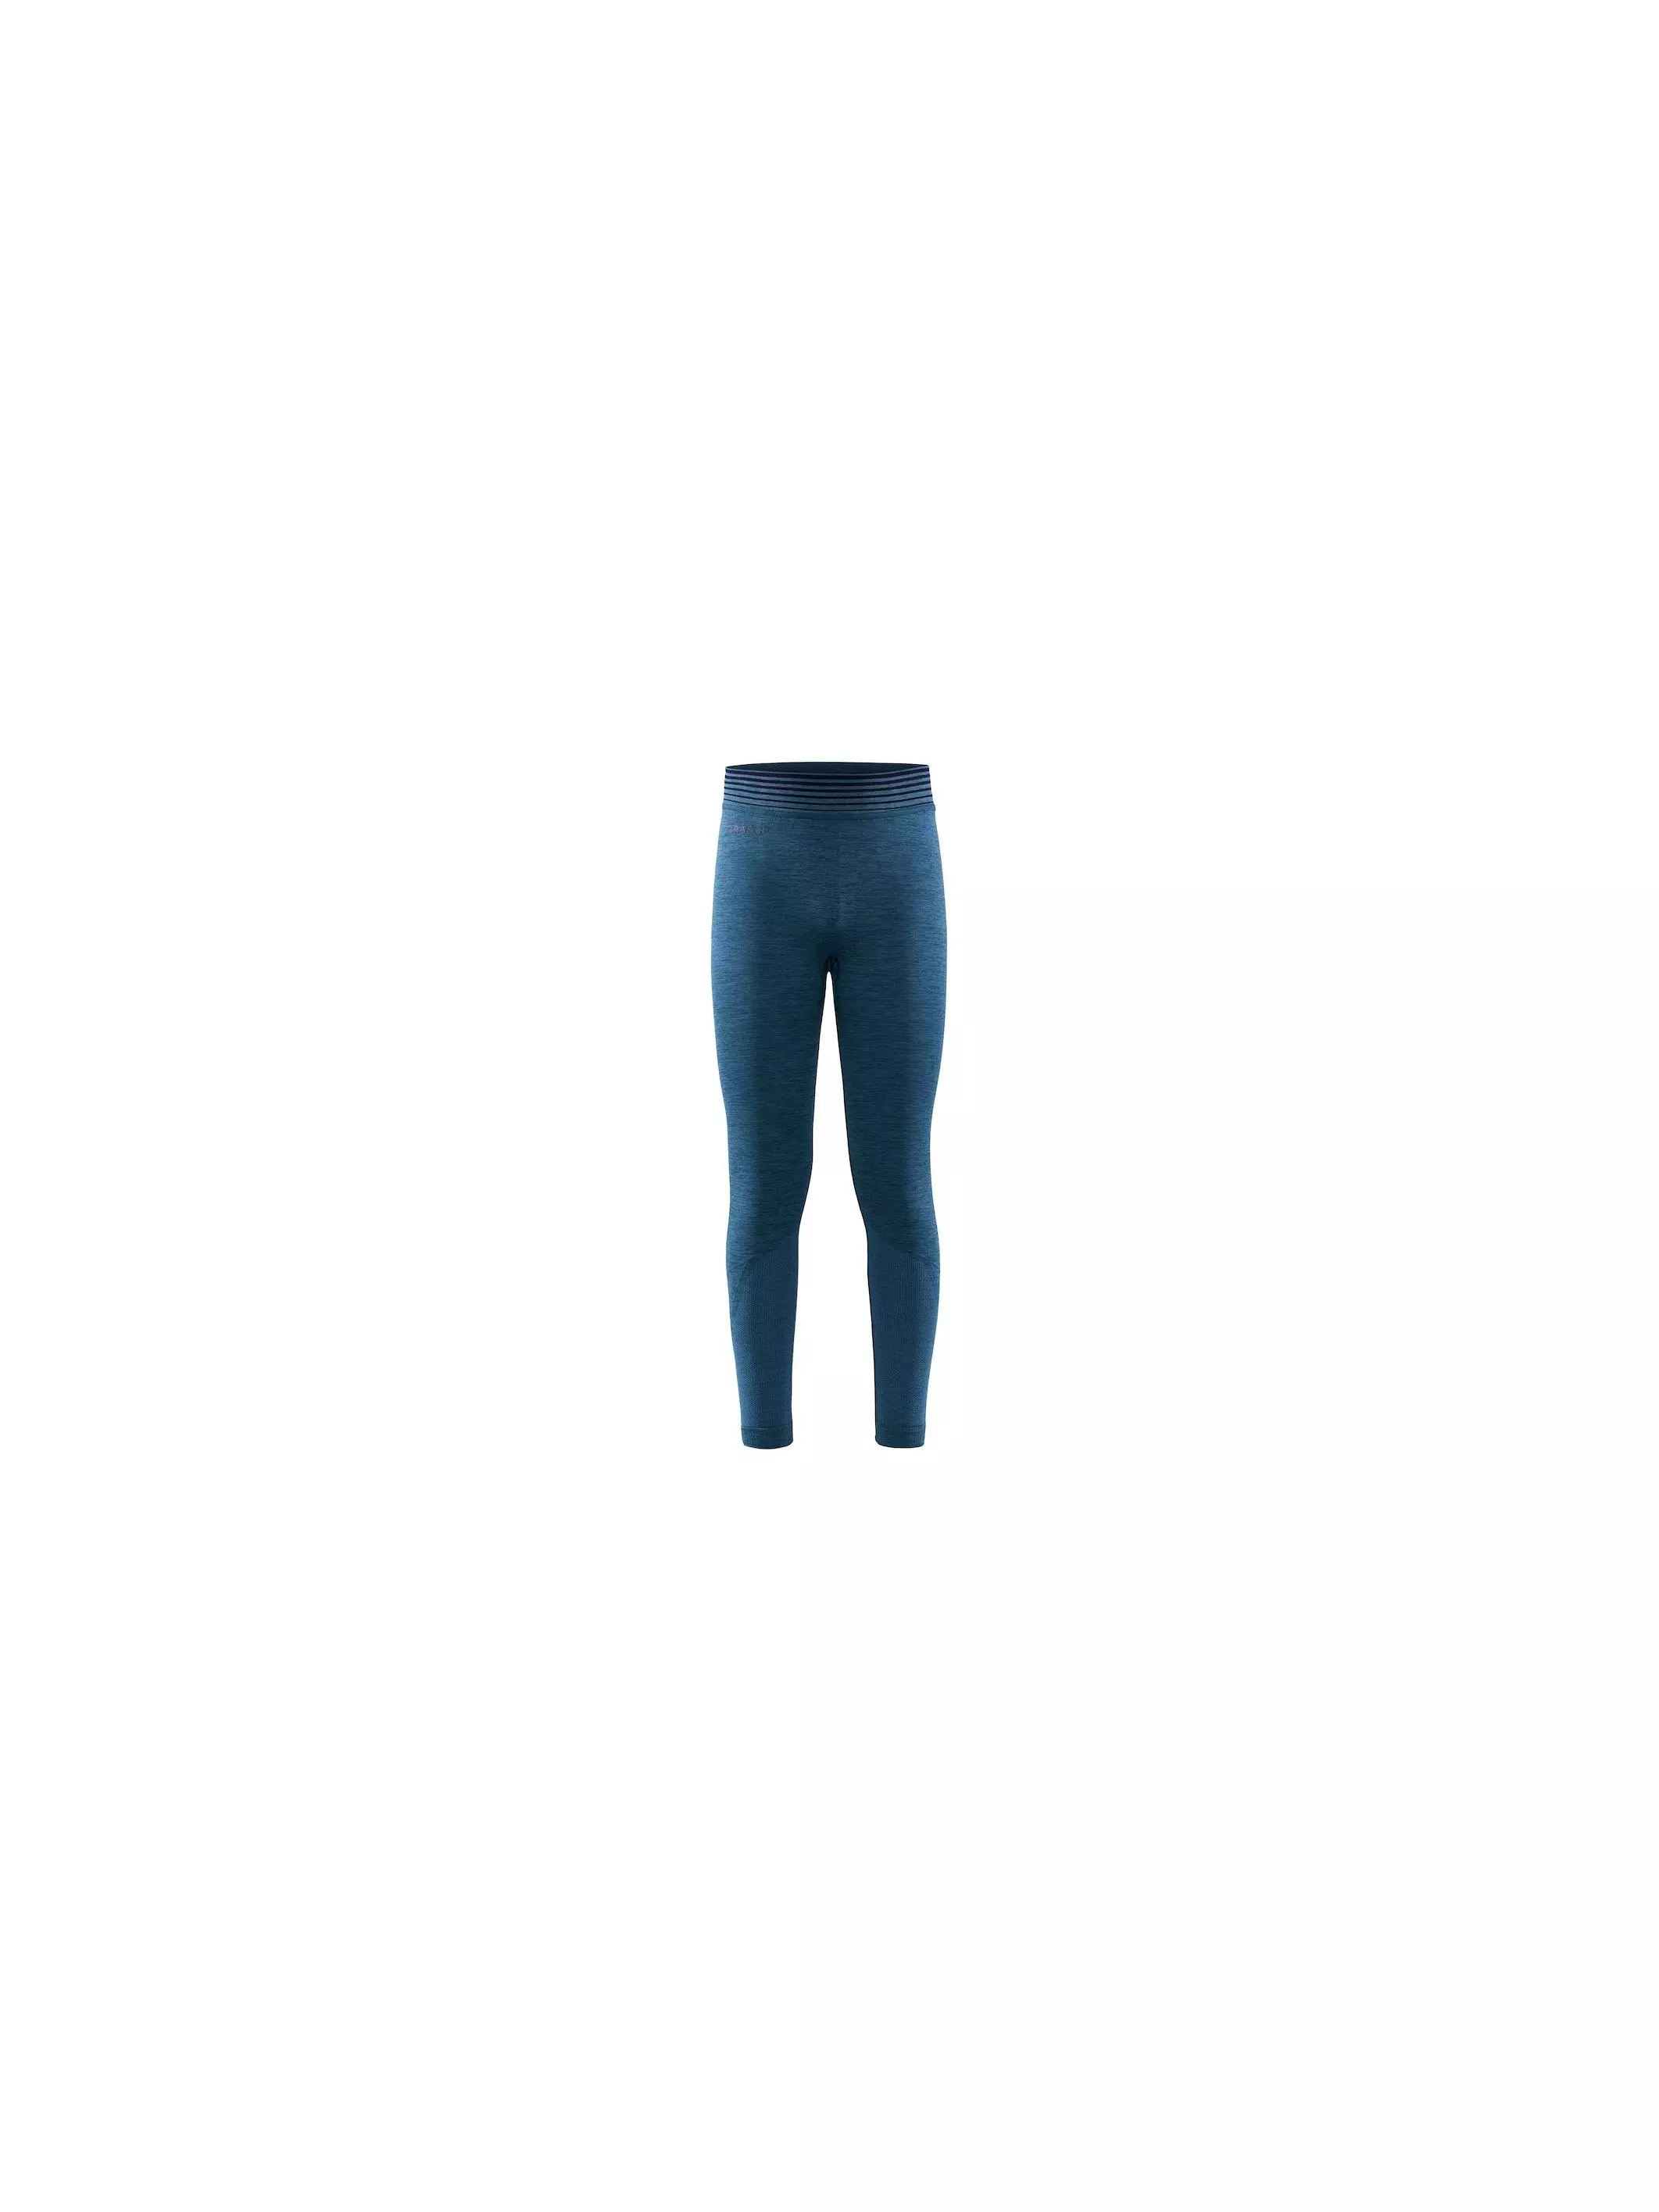 Pantalons & Collants Craft CORE DRY ACTIVE COMFORT PANT JR - 1911234